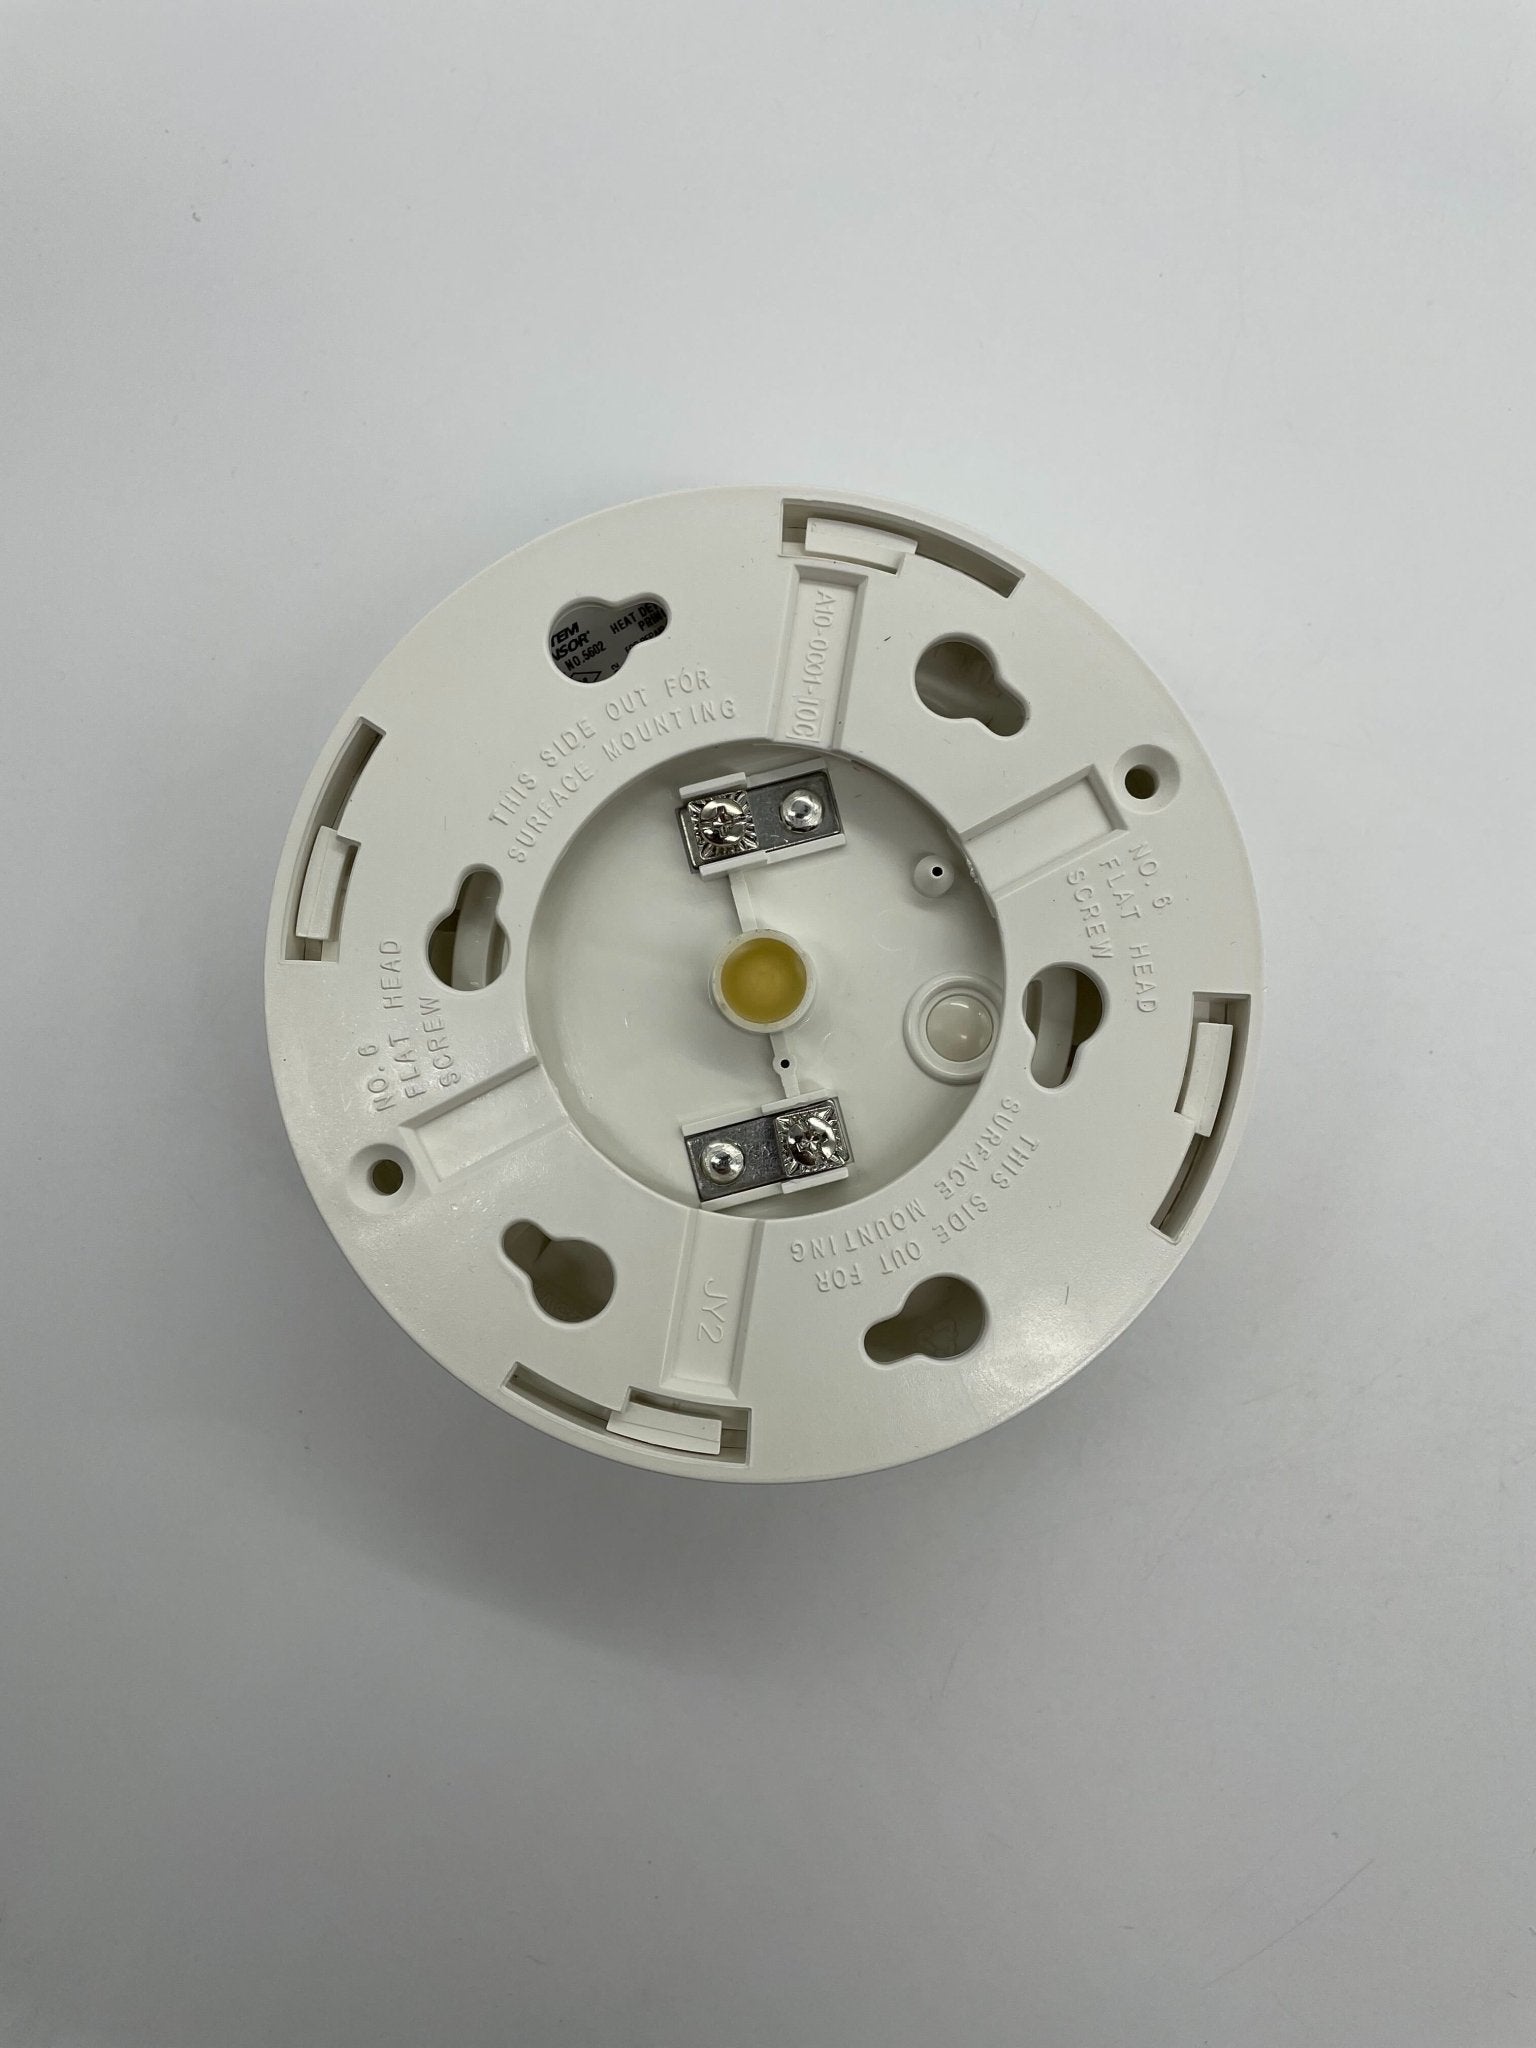 System Sensor 5602 - The Fire Alarm Supplier